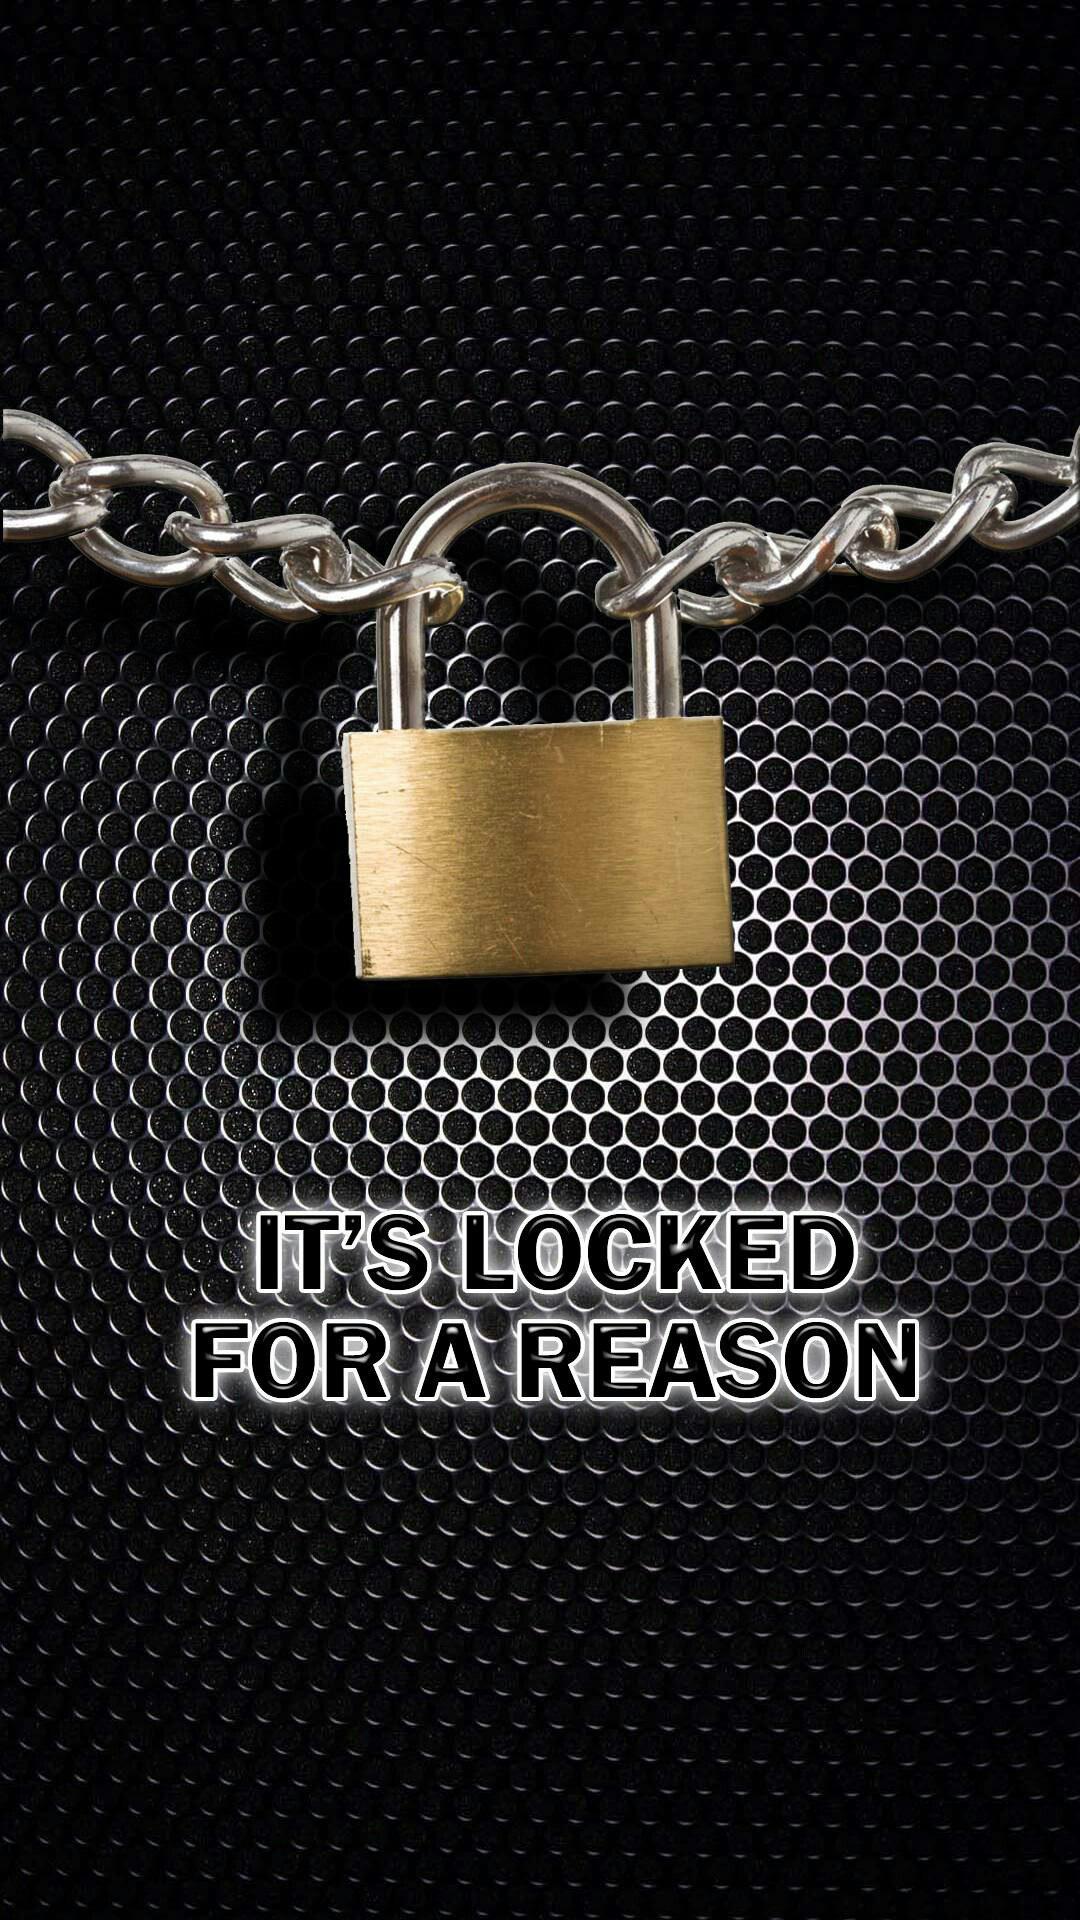 Locked for a Reason wallpaper by BillyAnalog  Download on ZEDGE  9f05